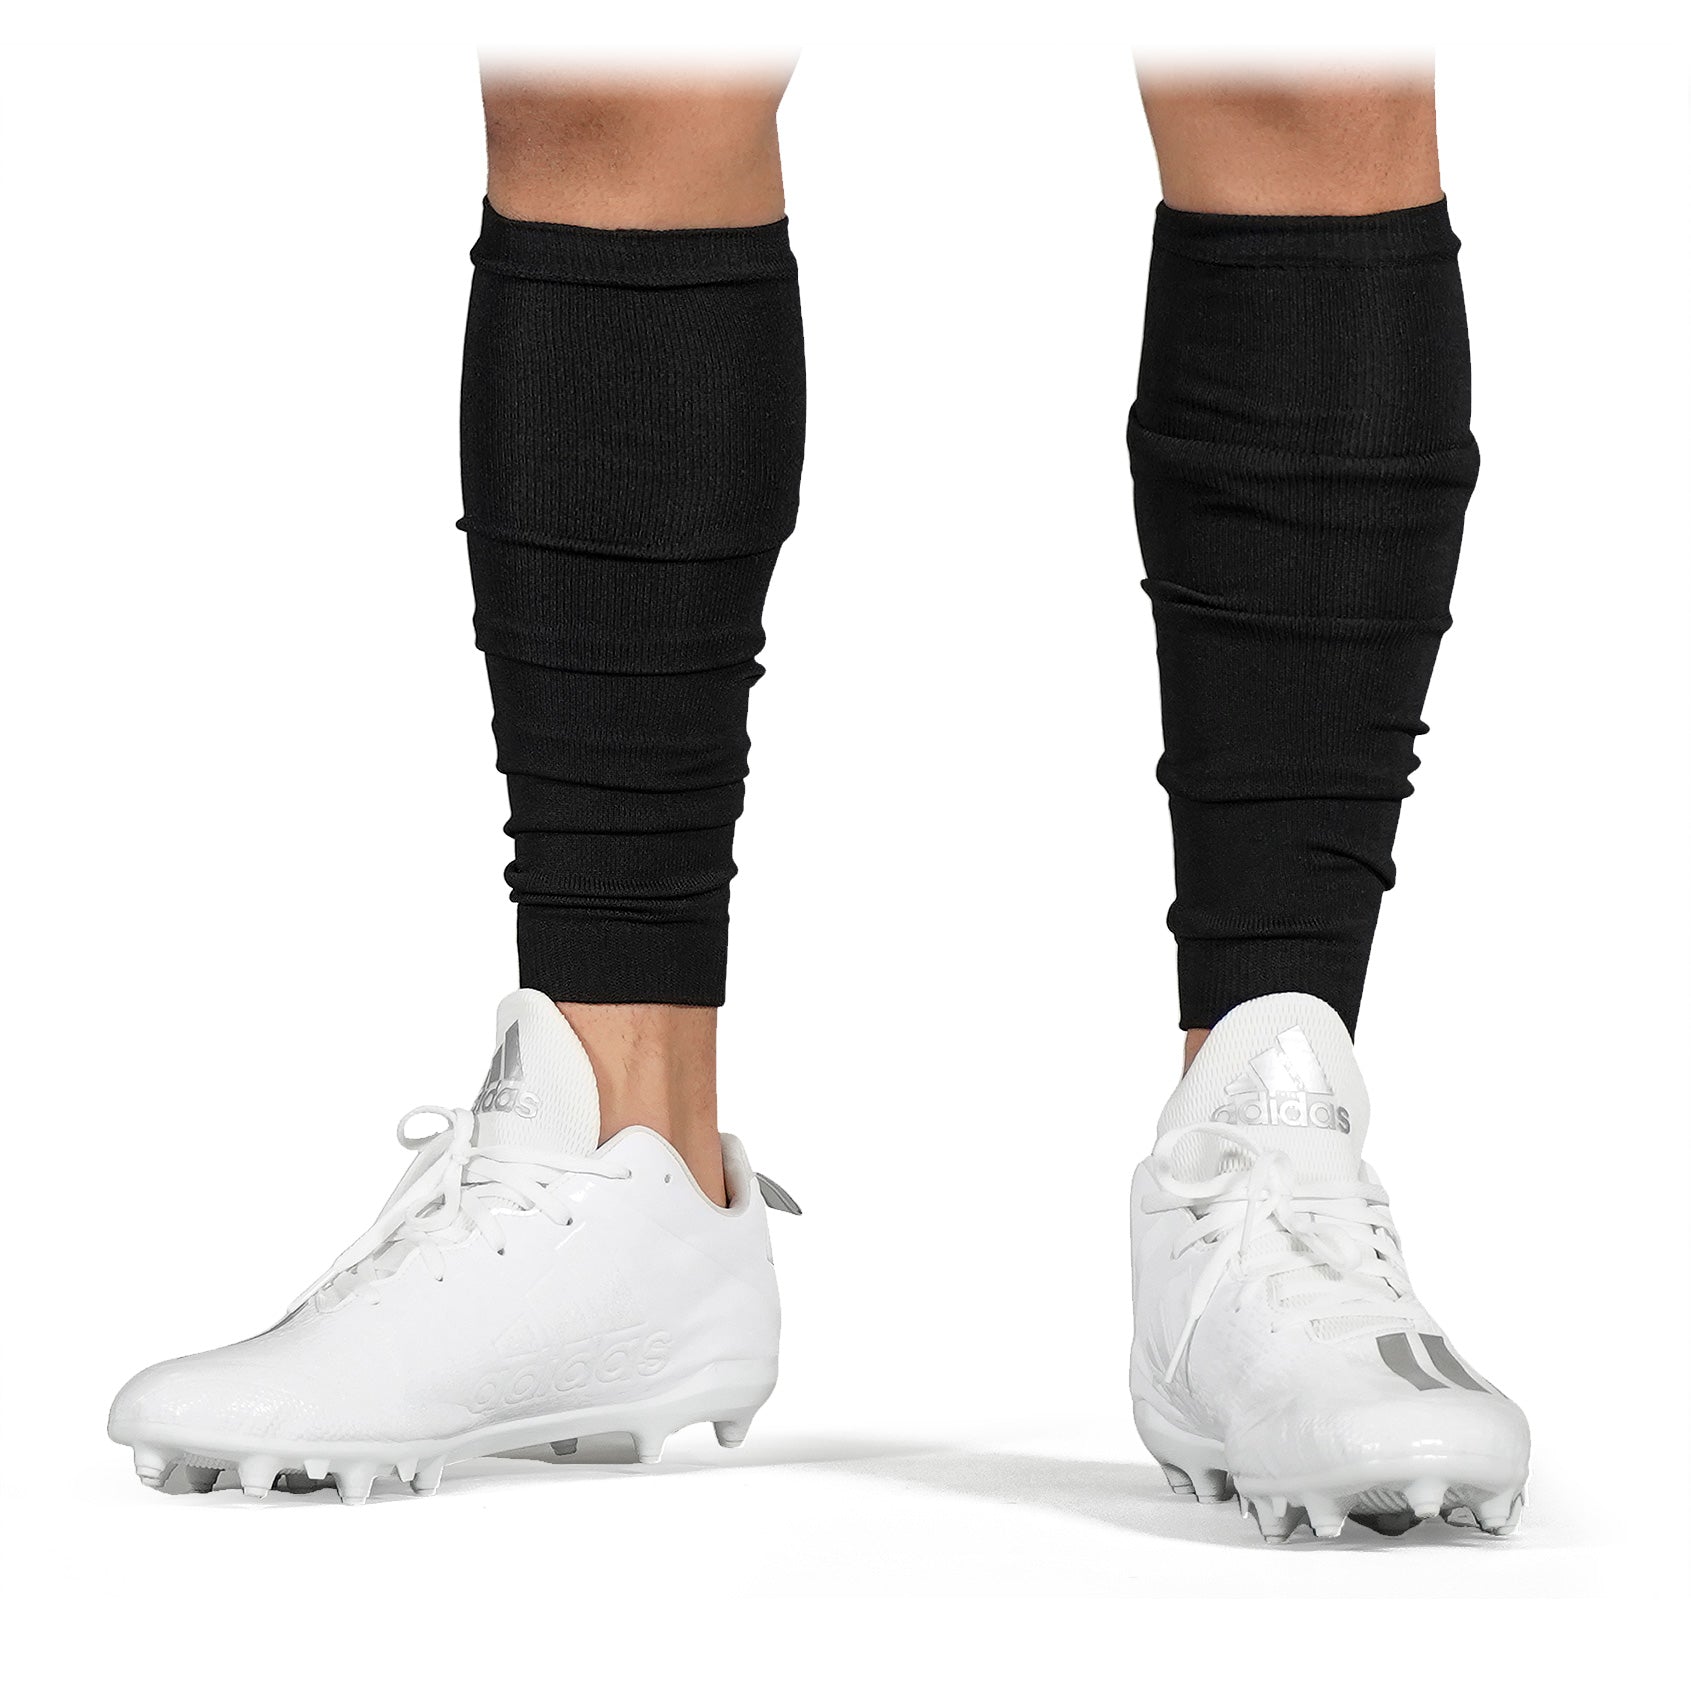 Adult Football Leg Sleeves (White)